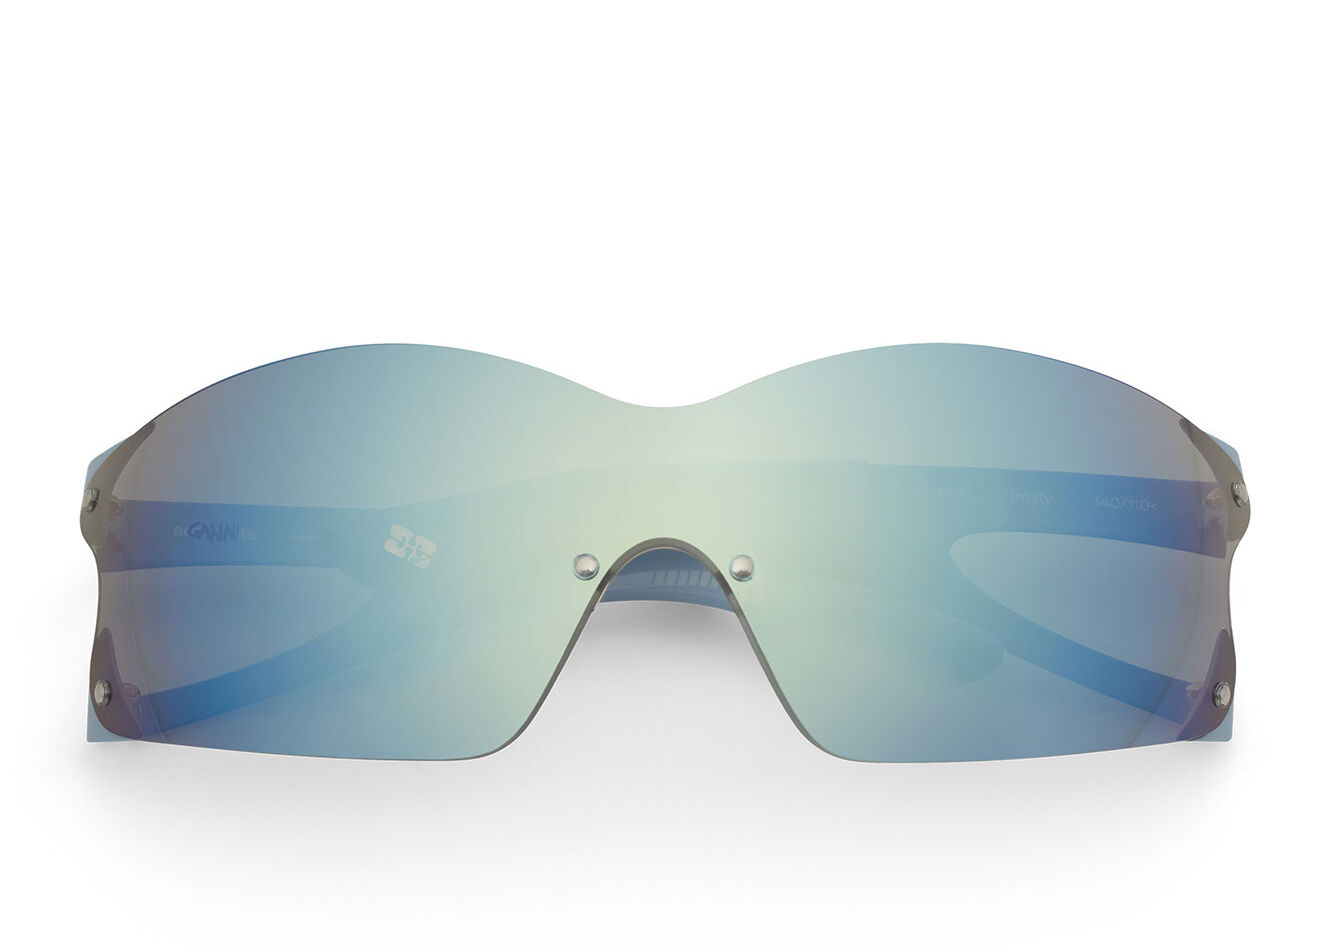 GANNI x Ace & Tate Silver Lake Blue Noel Sunglasses, Acetate, in colour Silver Lake Blue - 1 - GANNI